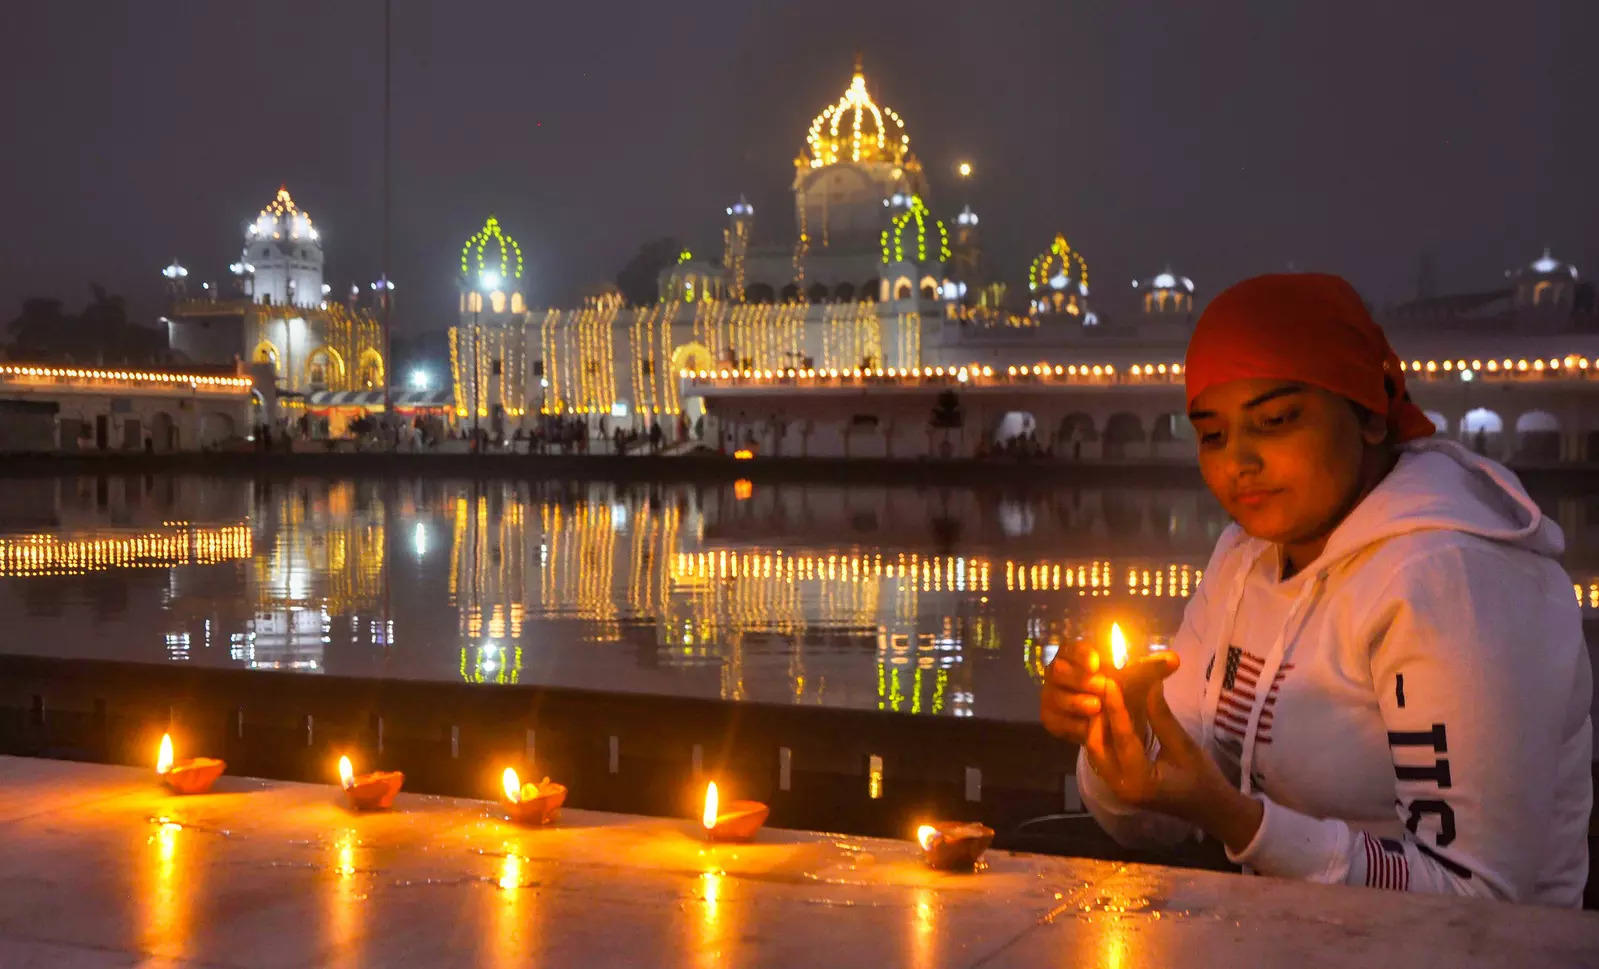 40 images from Guru Nanak Jayanti celebrations across India